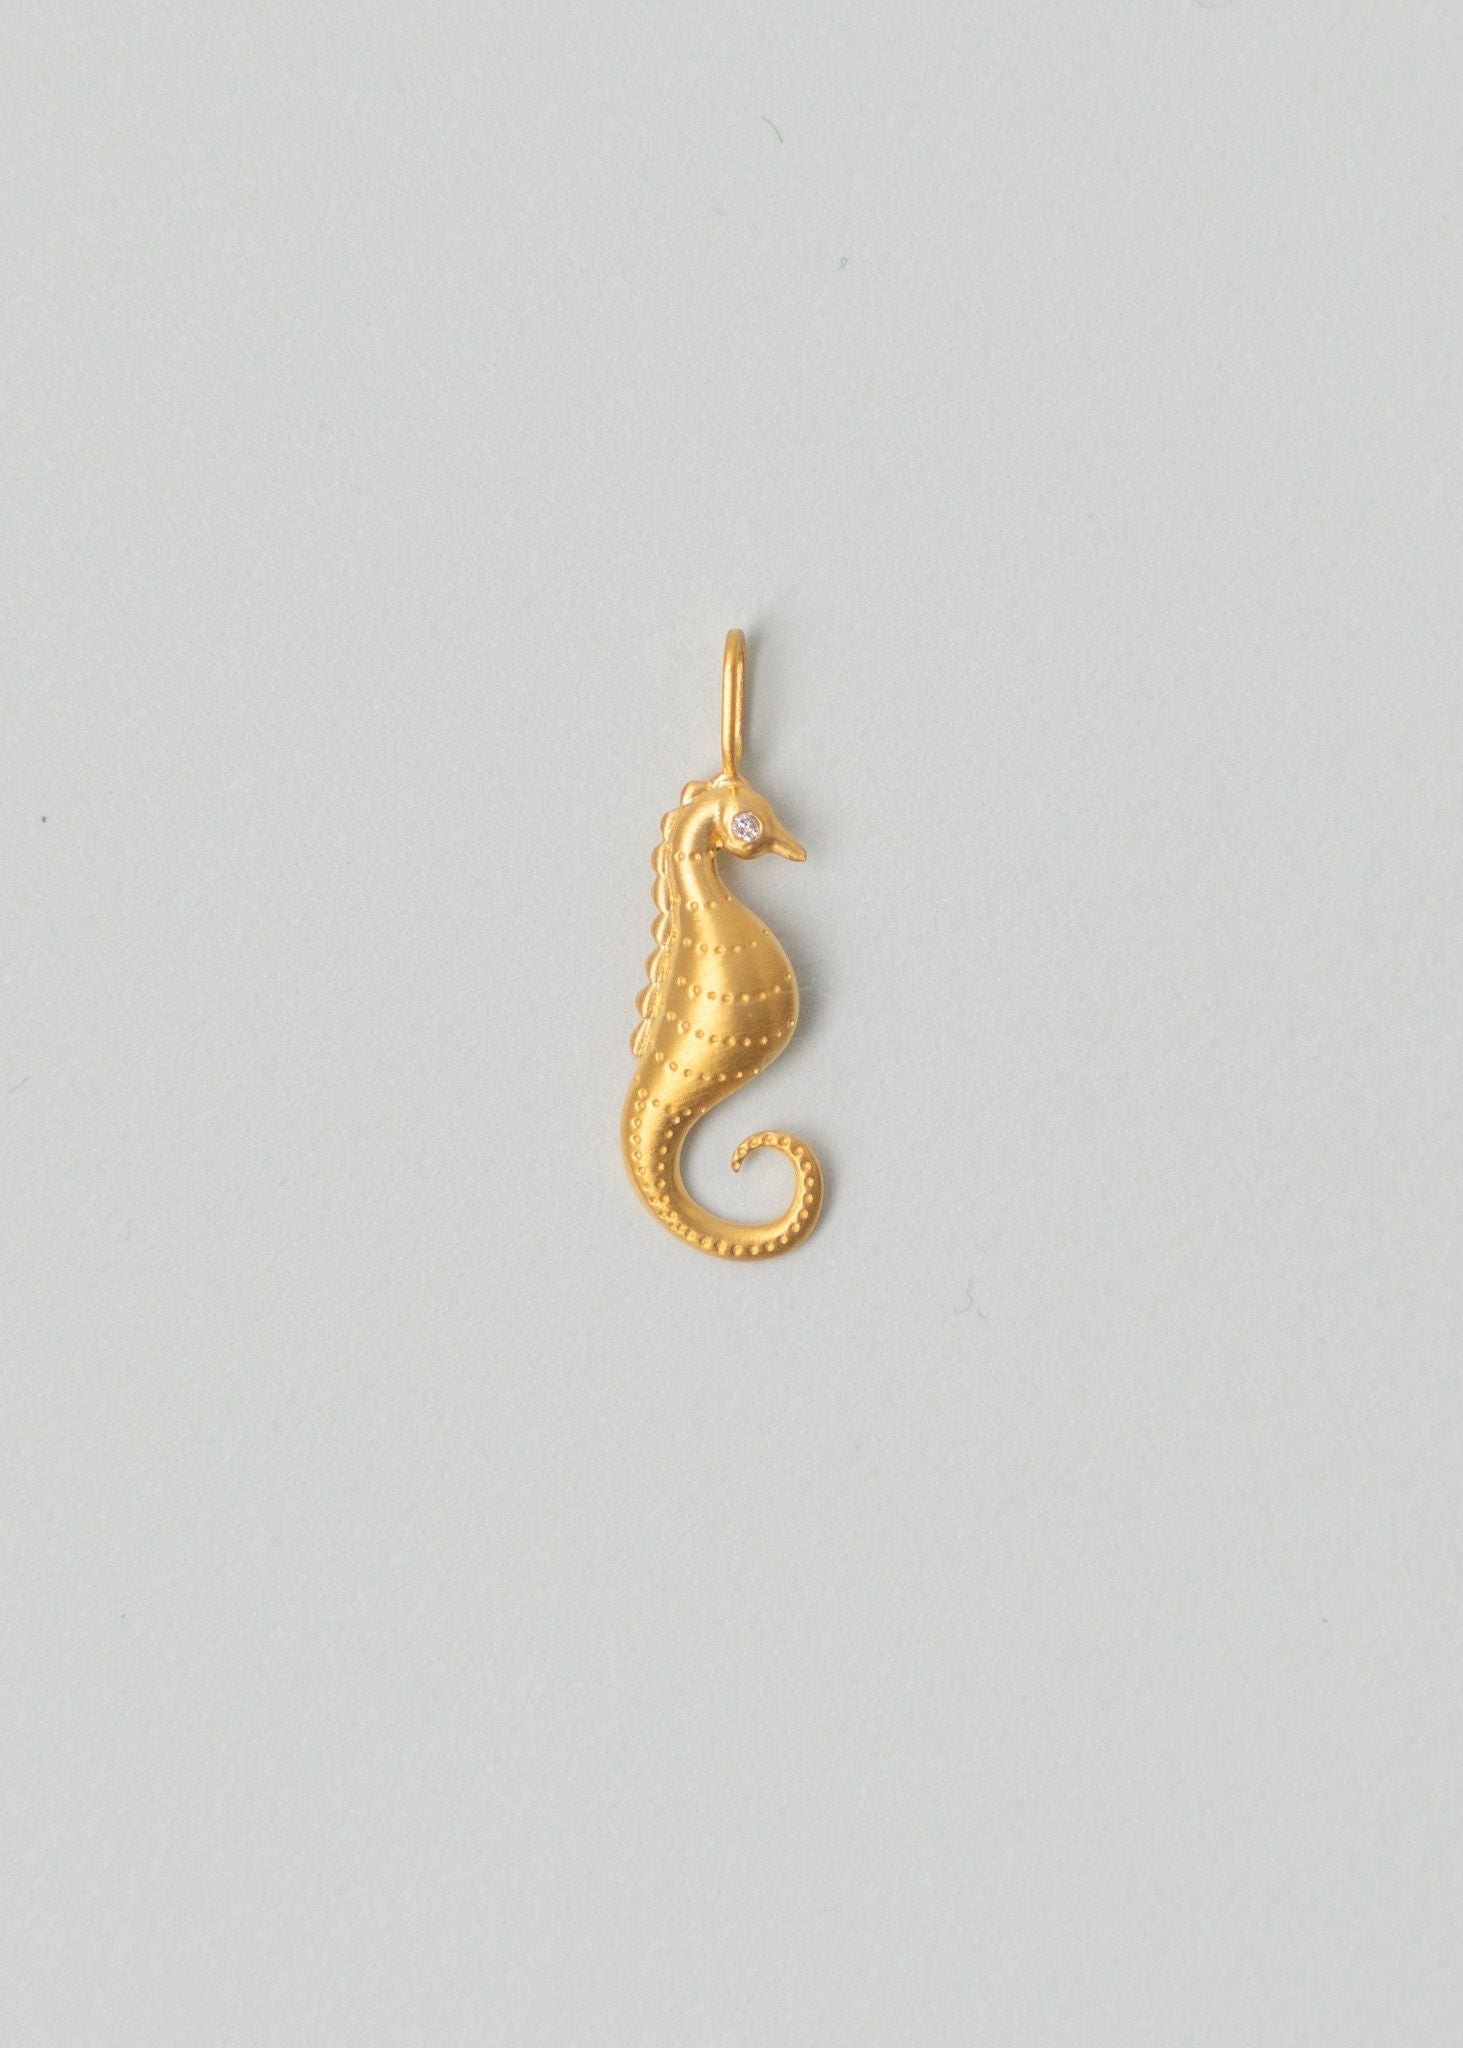 Seahorse Necklace Charm